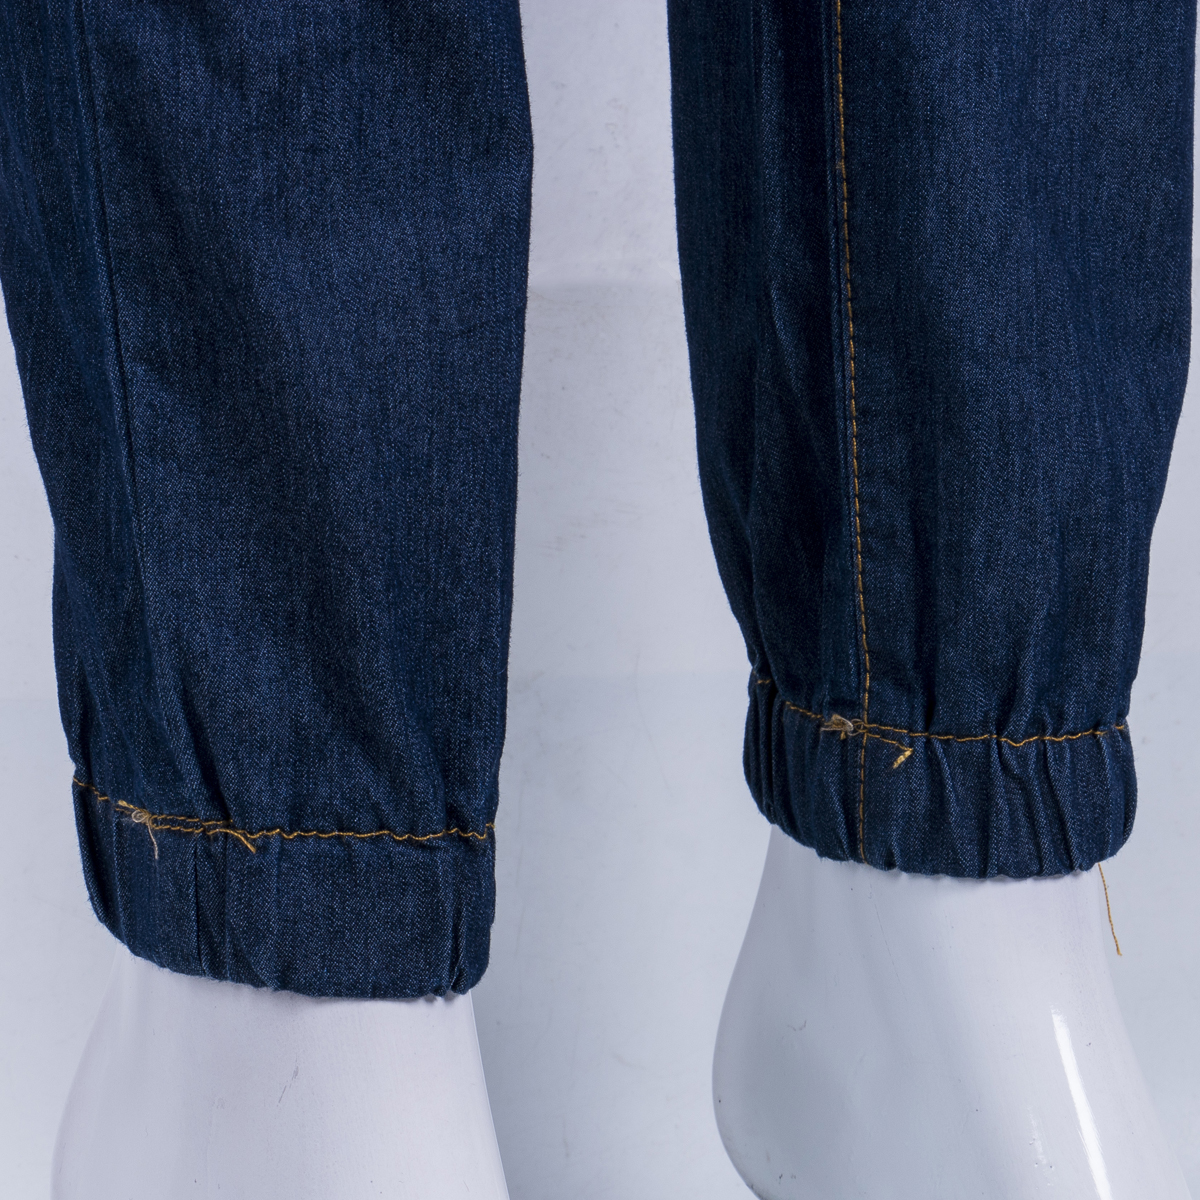 Puloru New Fashion Women Denim Skinny Cut Pencil Pants High Waist Stretch Jeans Trousers Slim drawstring bloomers jeans - image 4 of 5